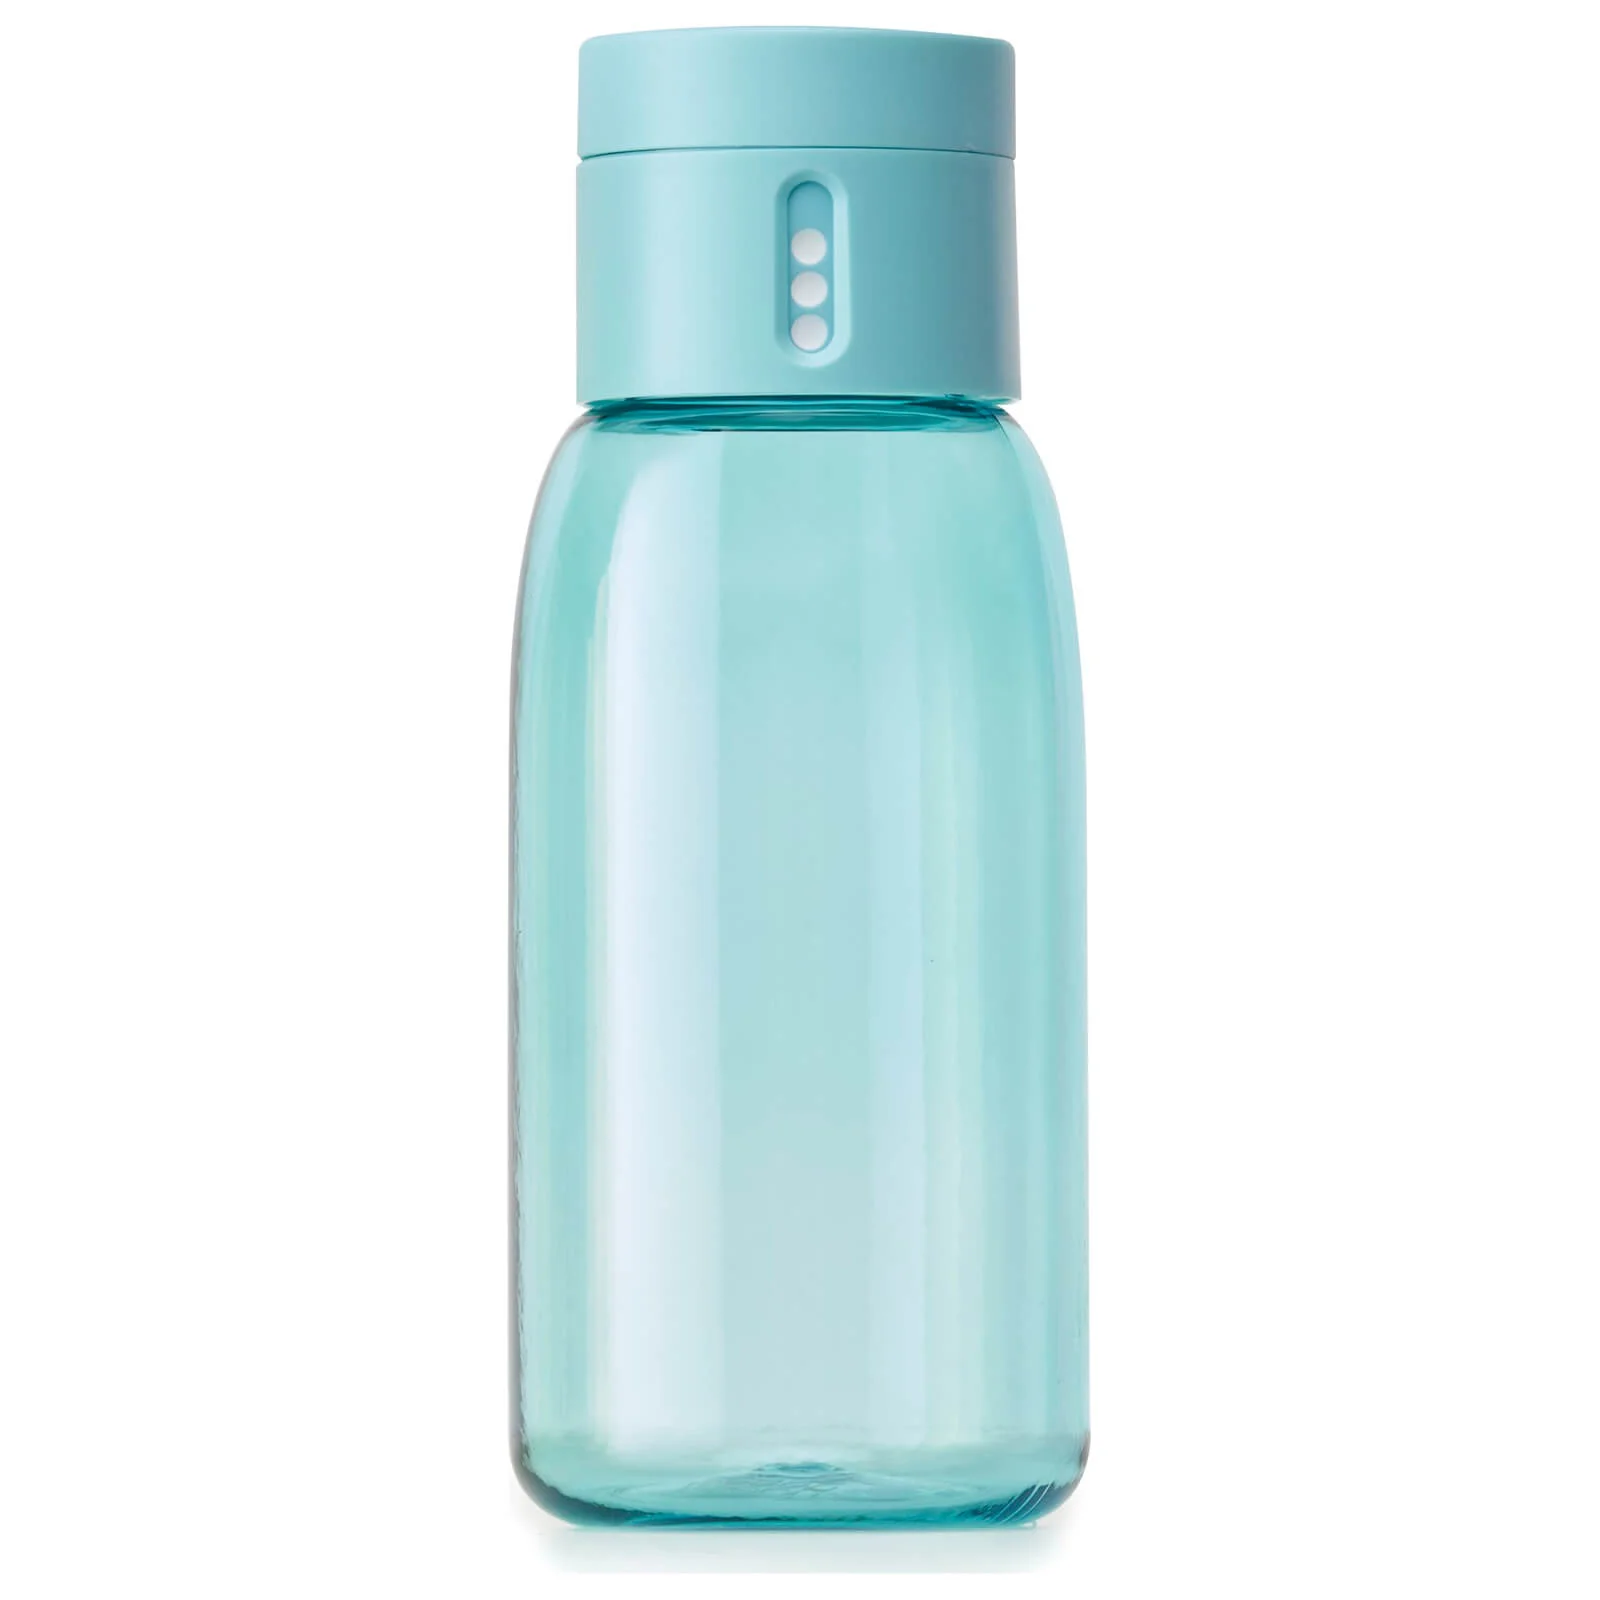 Joseph Joseph Dot Hydration-Tracking Water Bottle - Turquoise 400ml Image 1